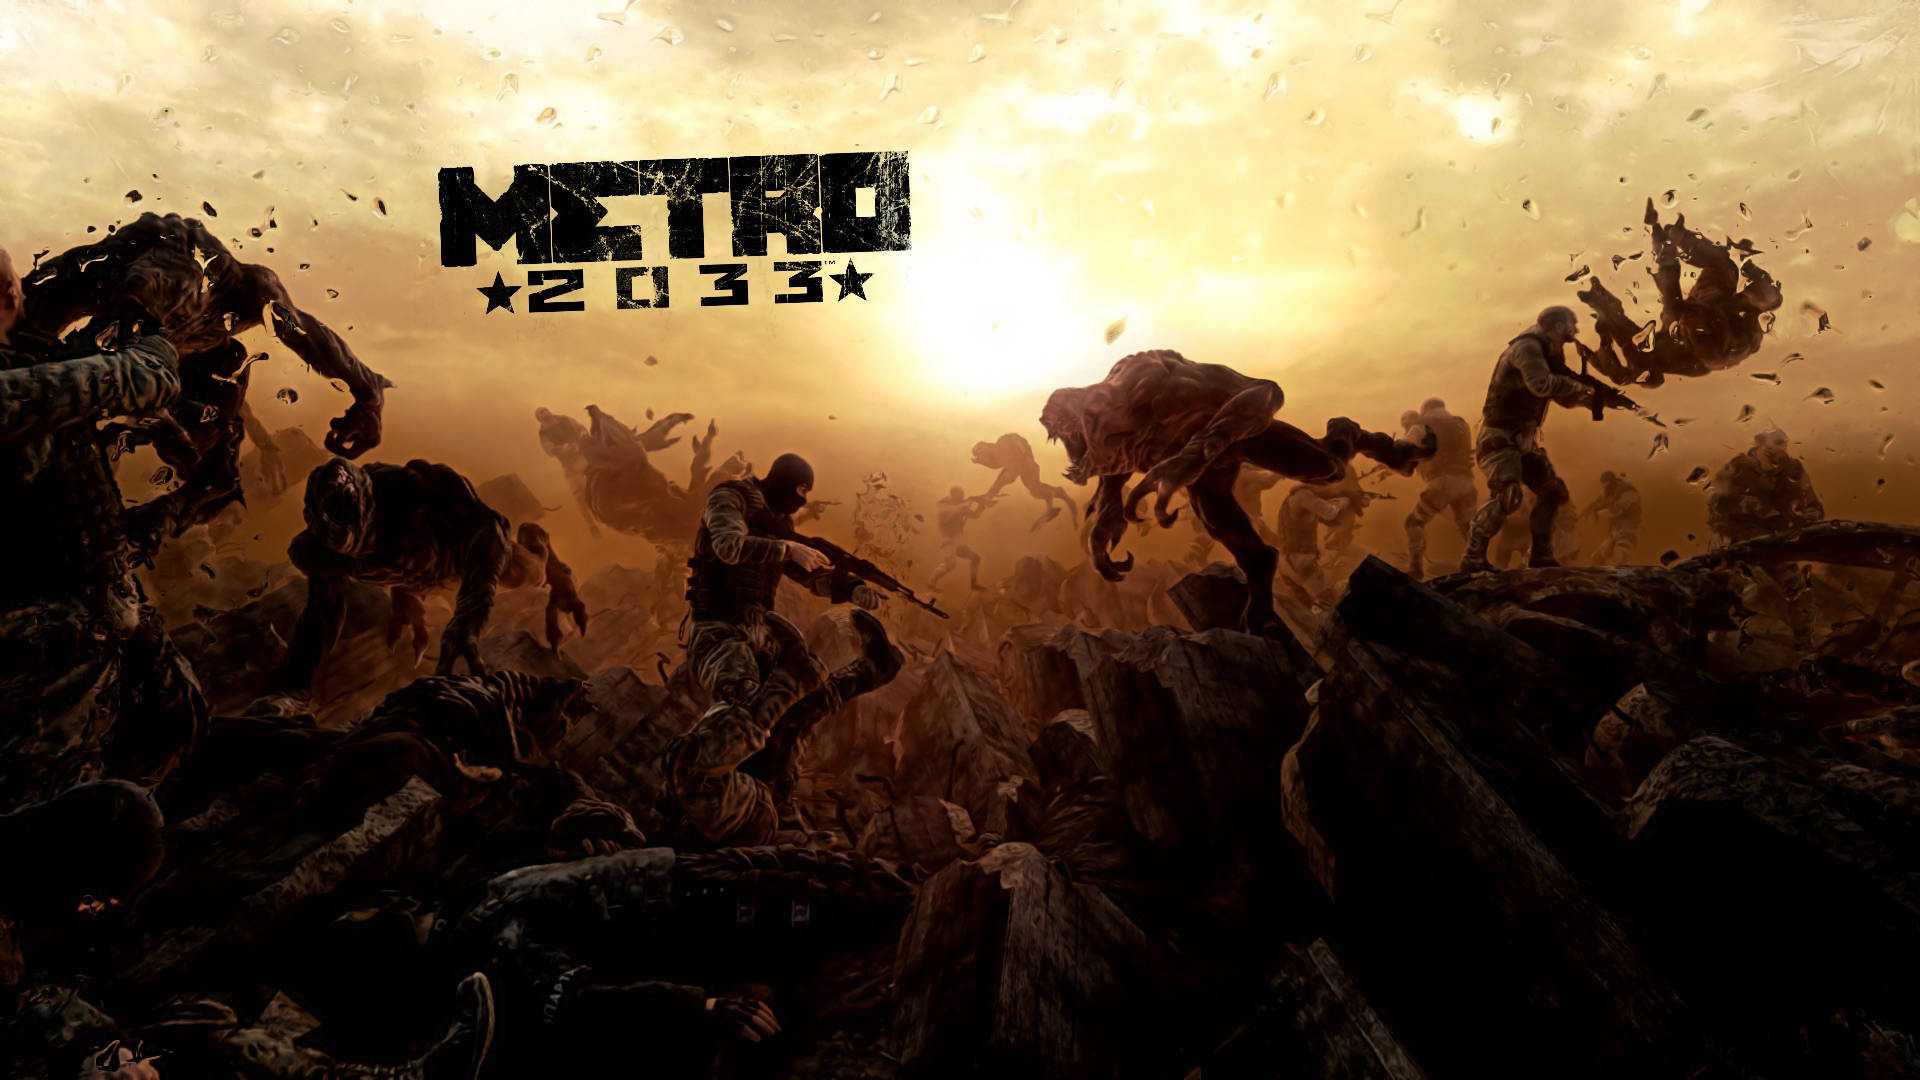 Metro 2033 Battle Poster Wallpaper